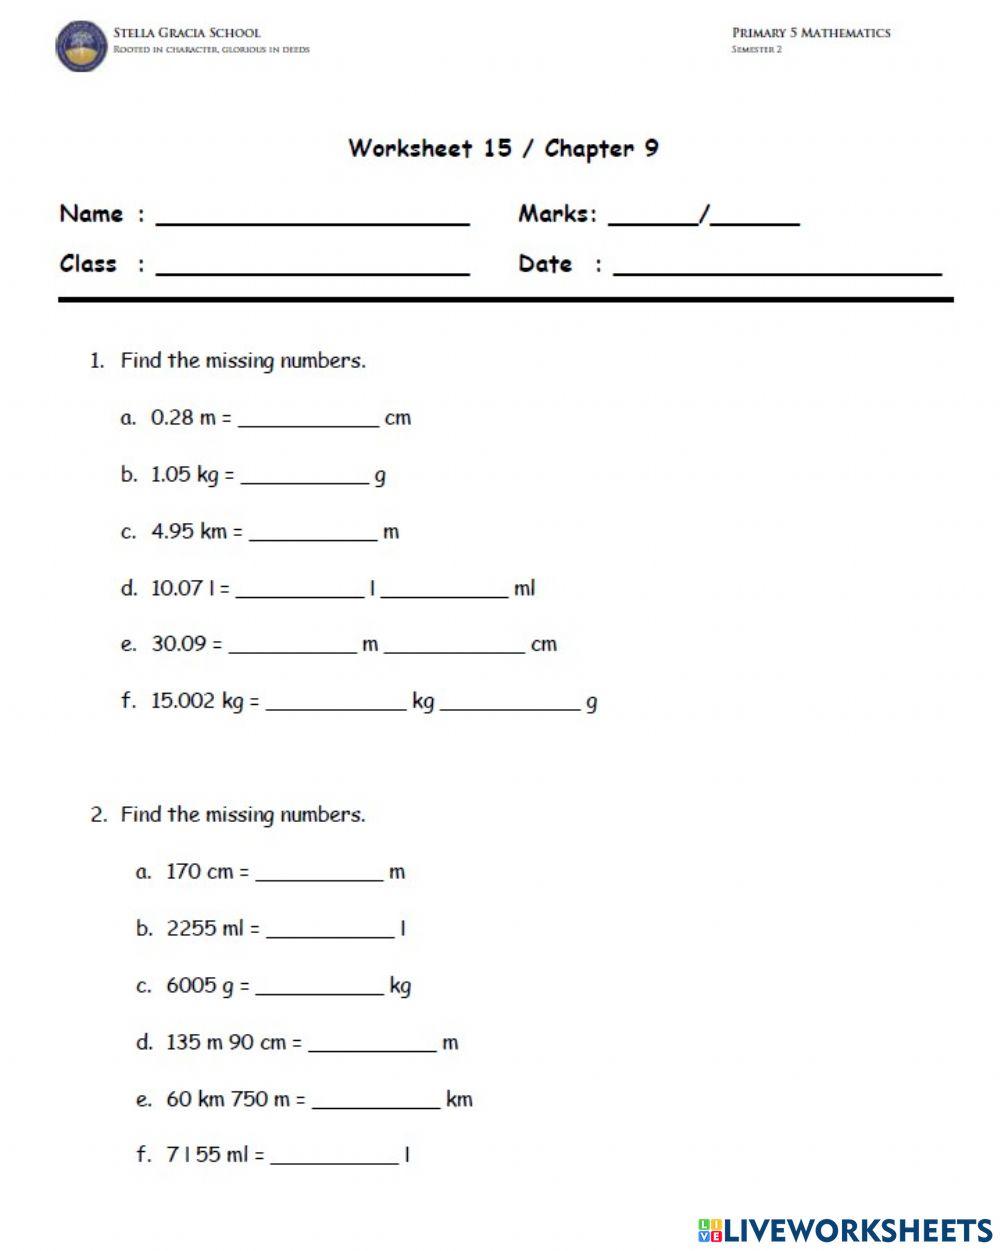 Worksheet 15 Chapter 9